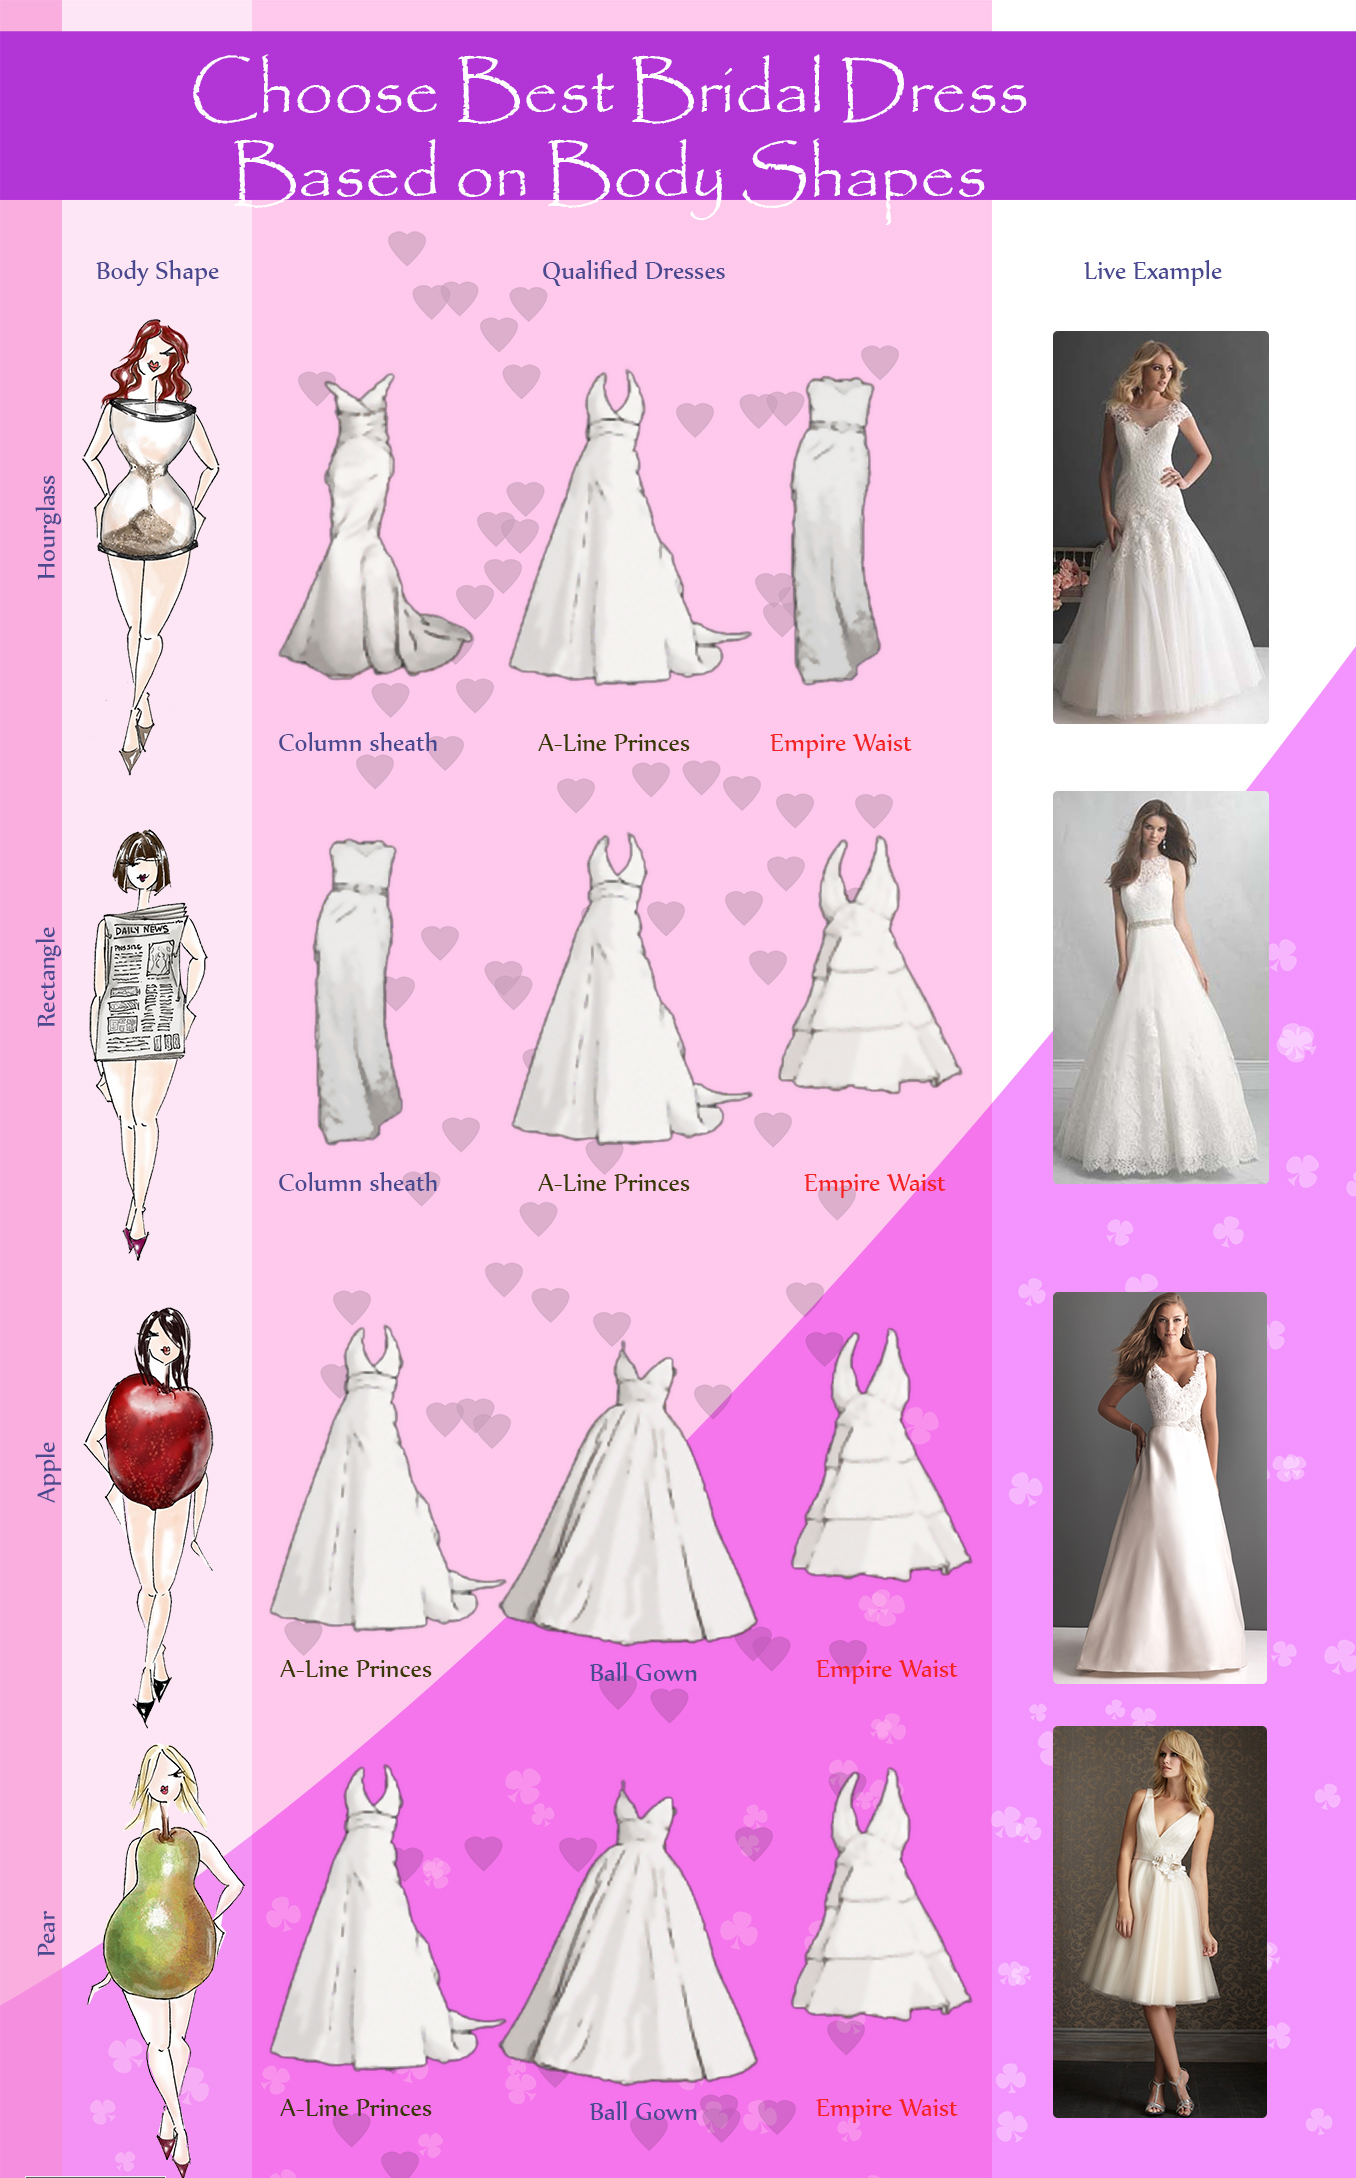 Choose Best Bridal Dress based on Body Shapes 2019